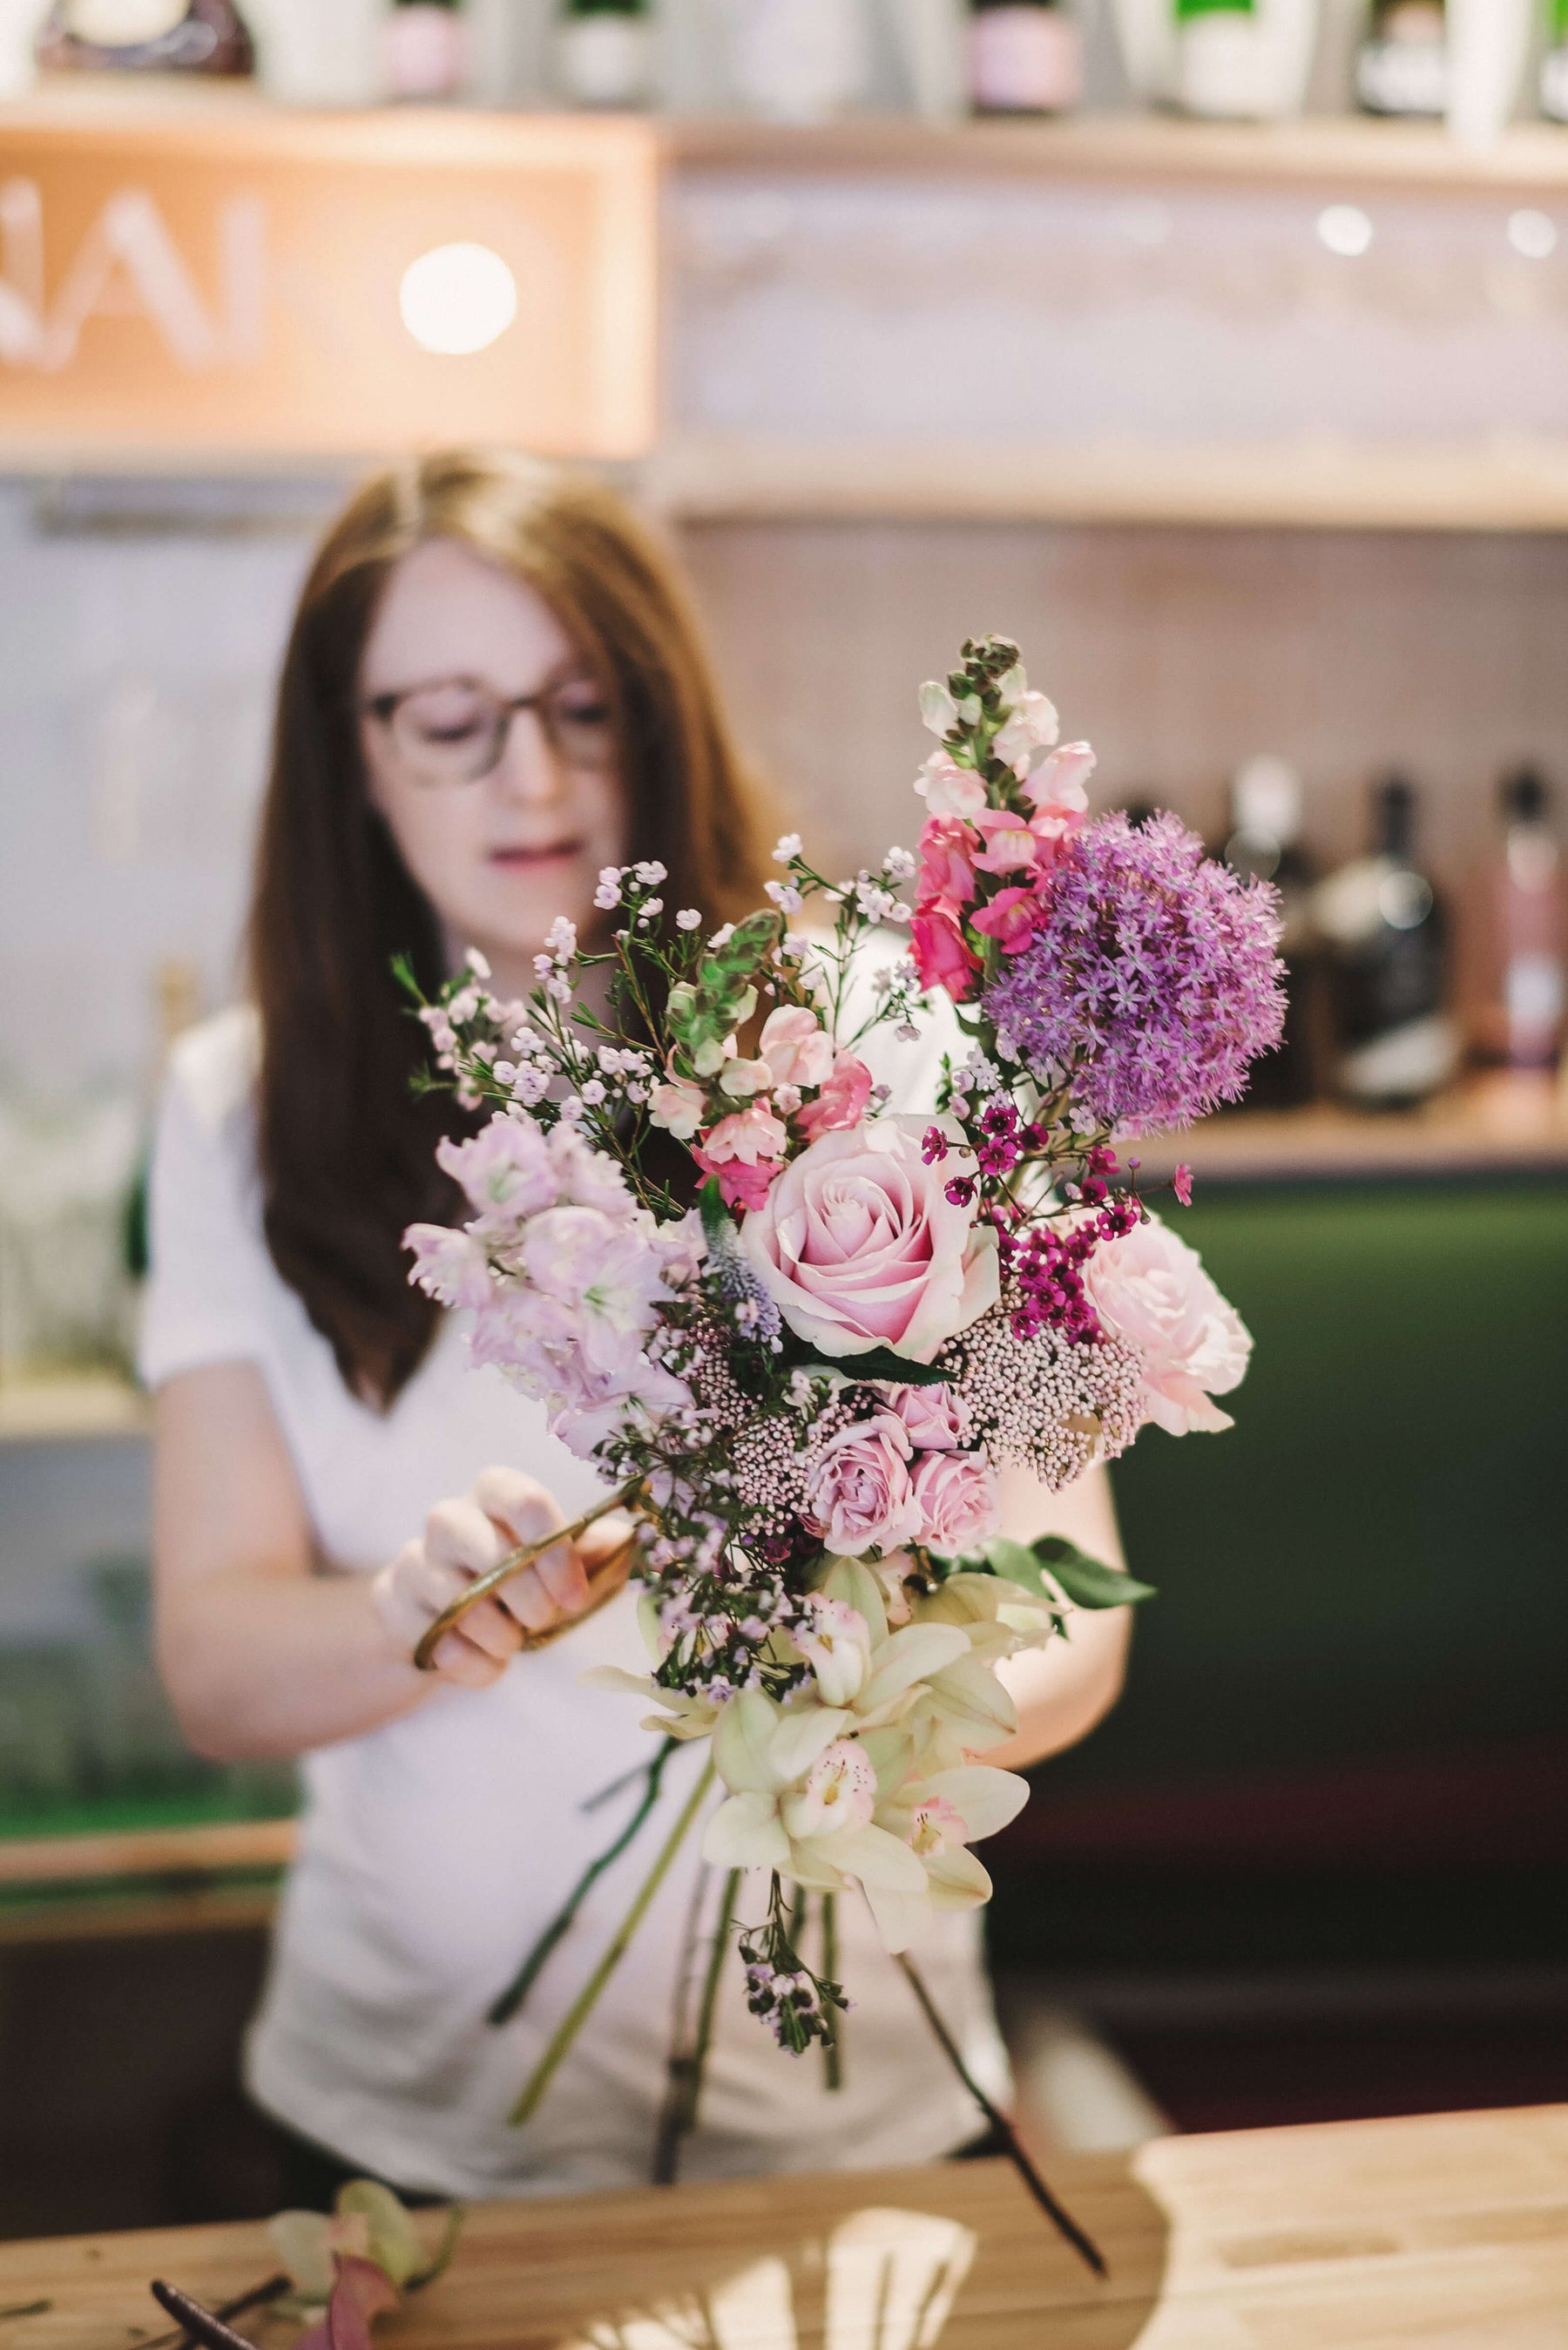 Florist Working In Her Flower Shop. by Stocksy Contributor Mosuno -  Stocksy